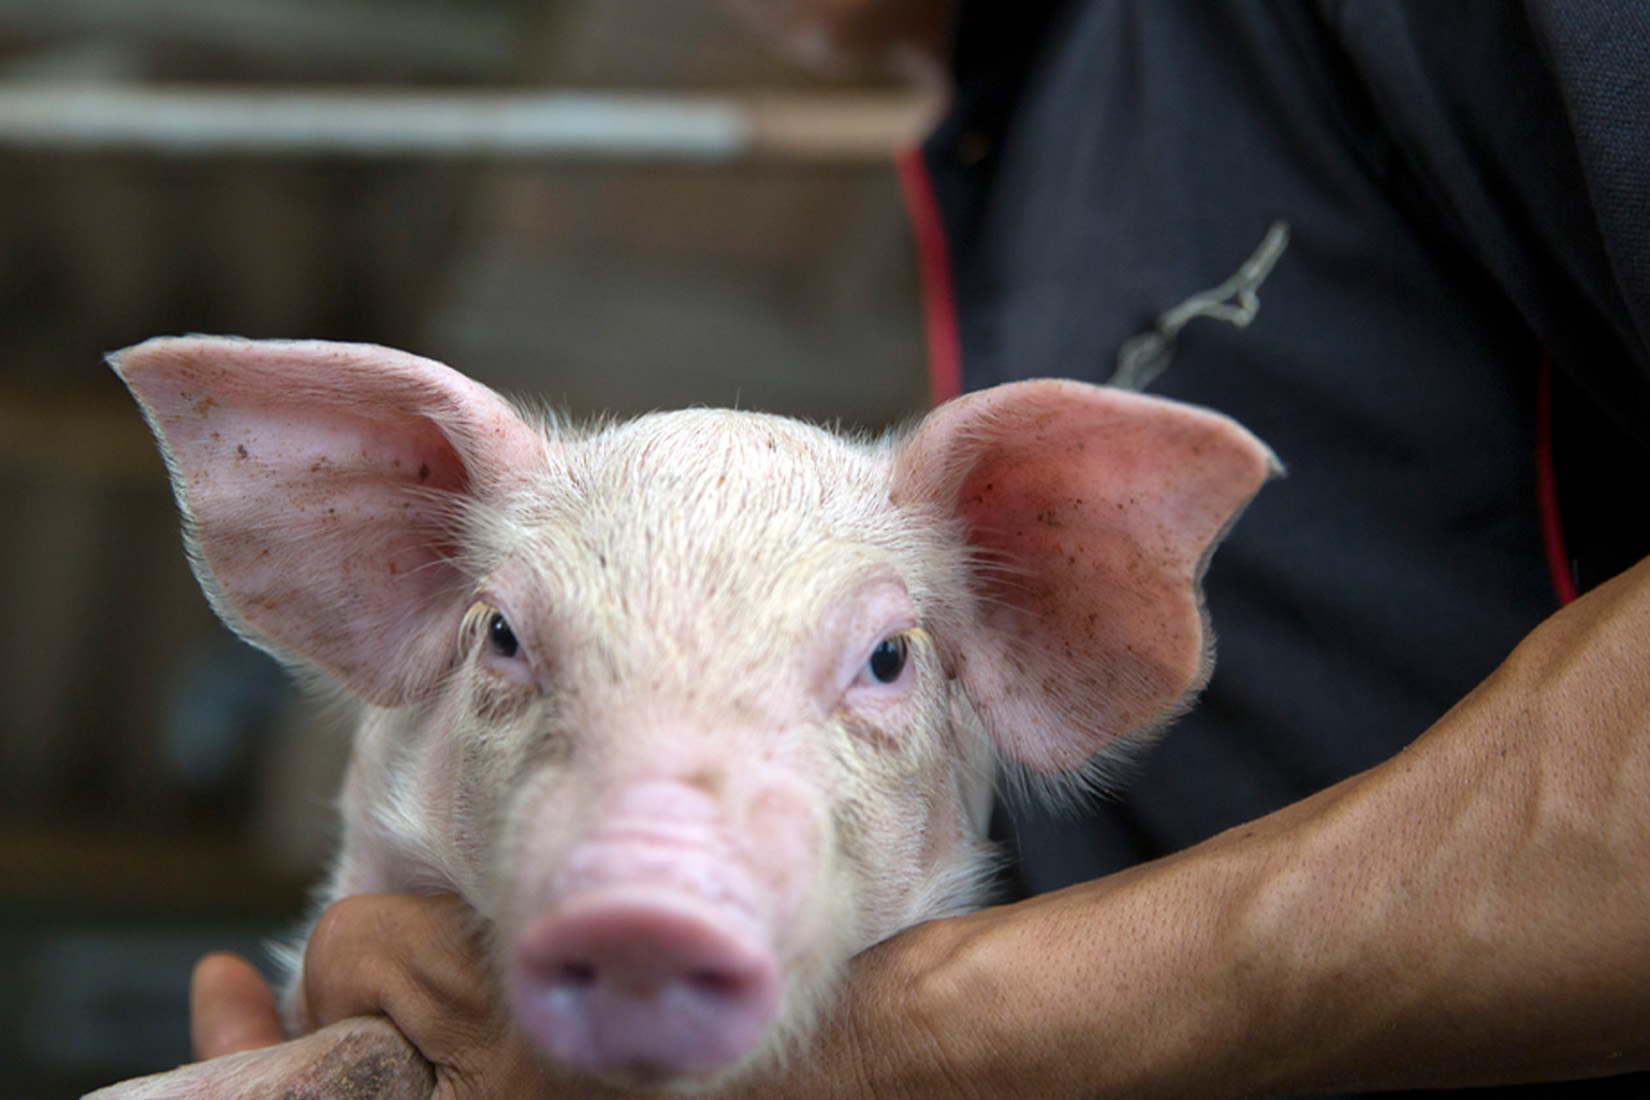 A close up photo of a pig